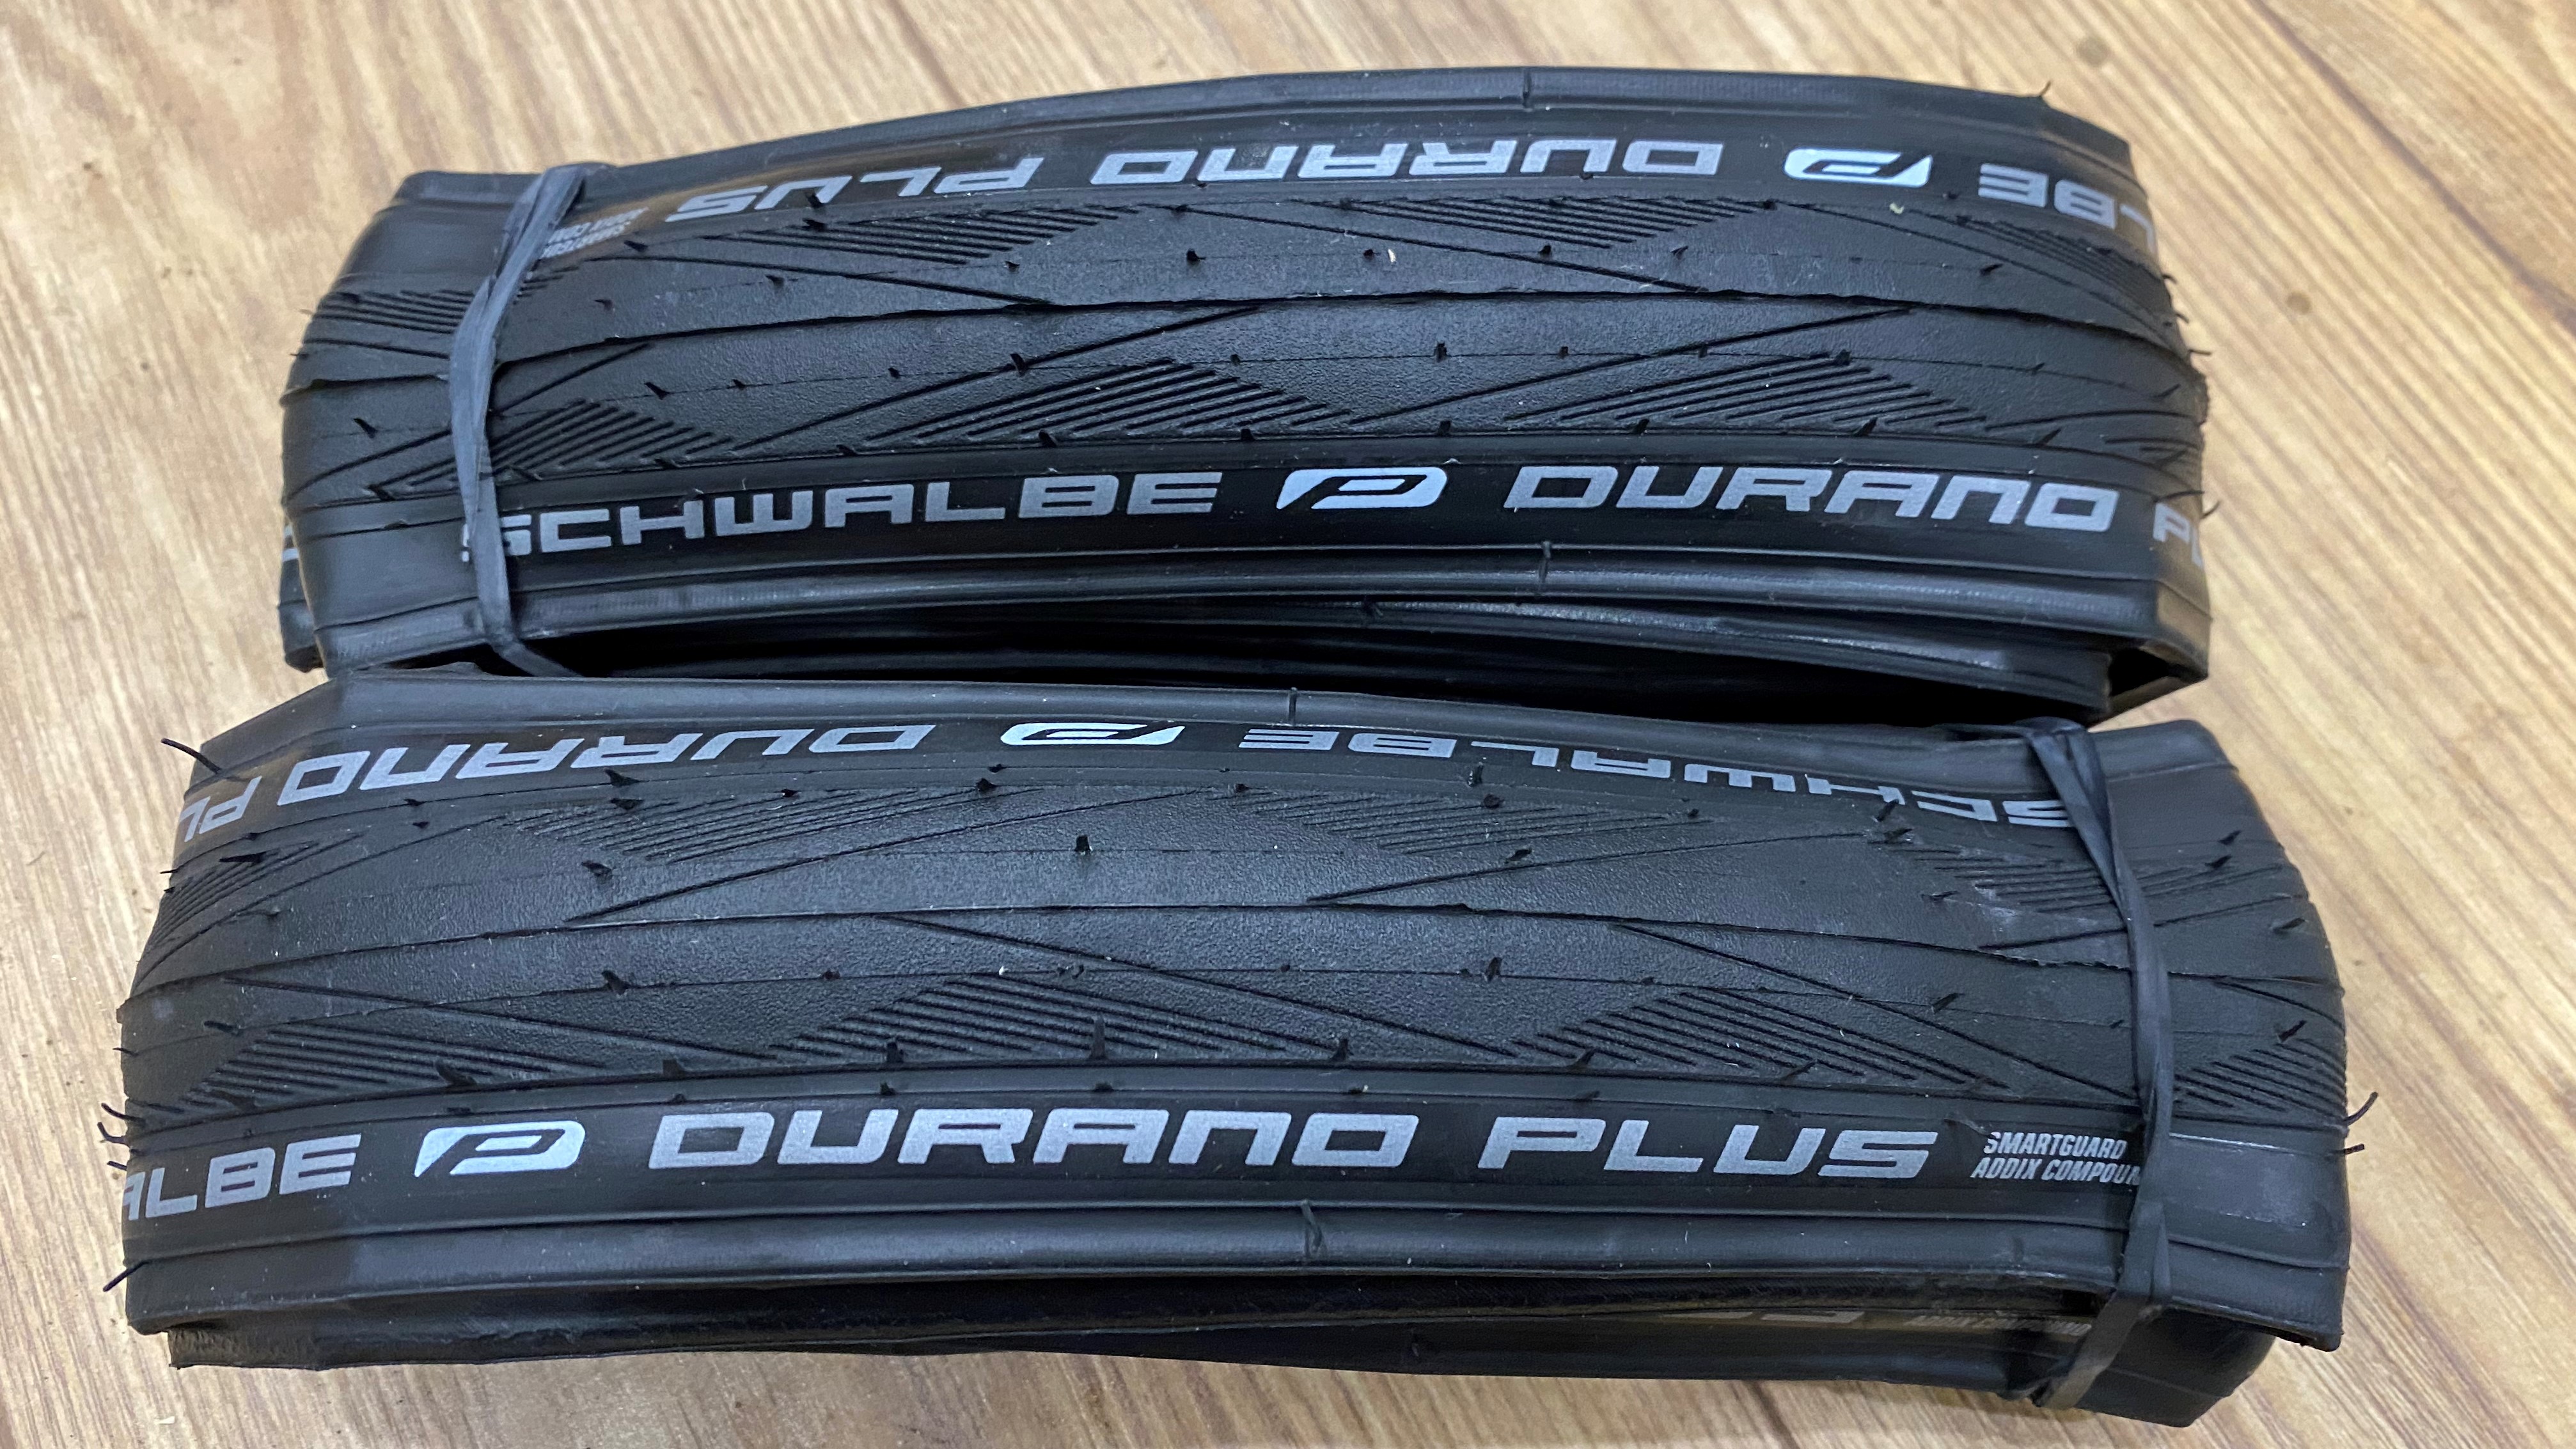 Schwalbe Durano Plus tire review - reliable winter rubber